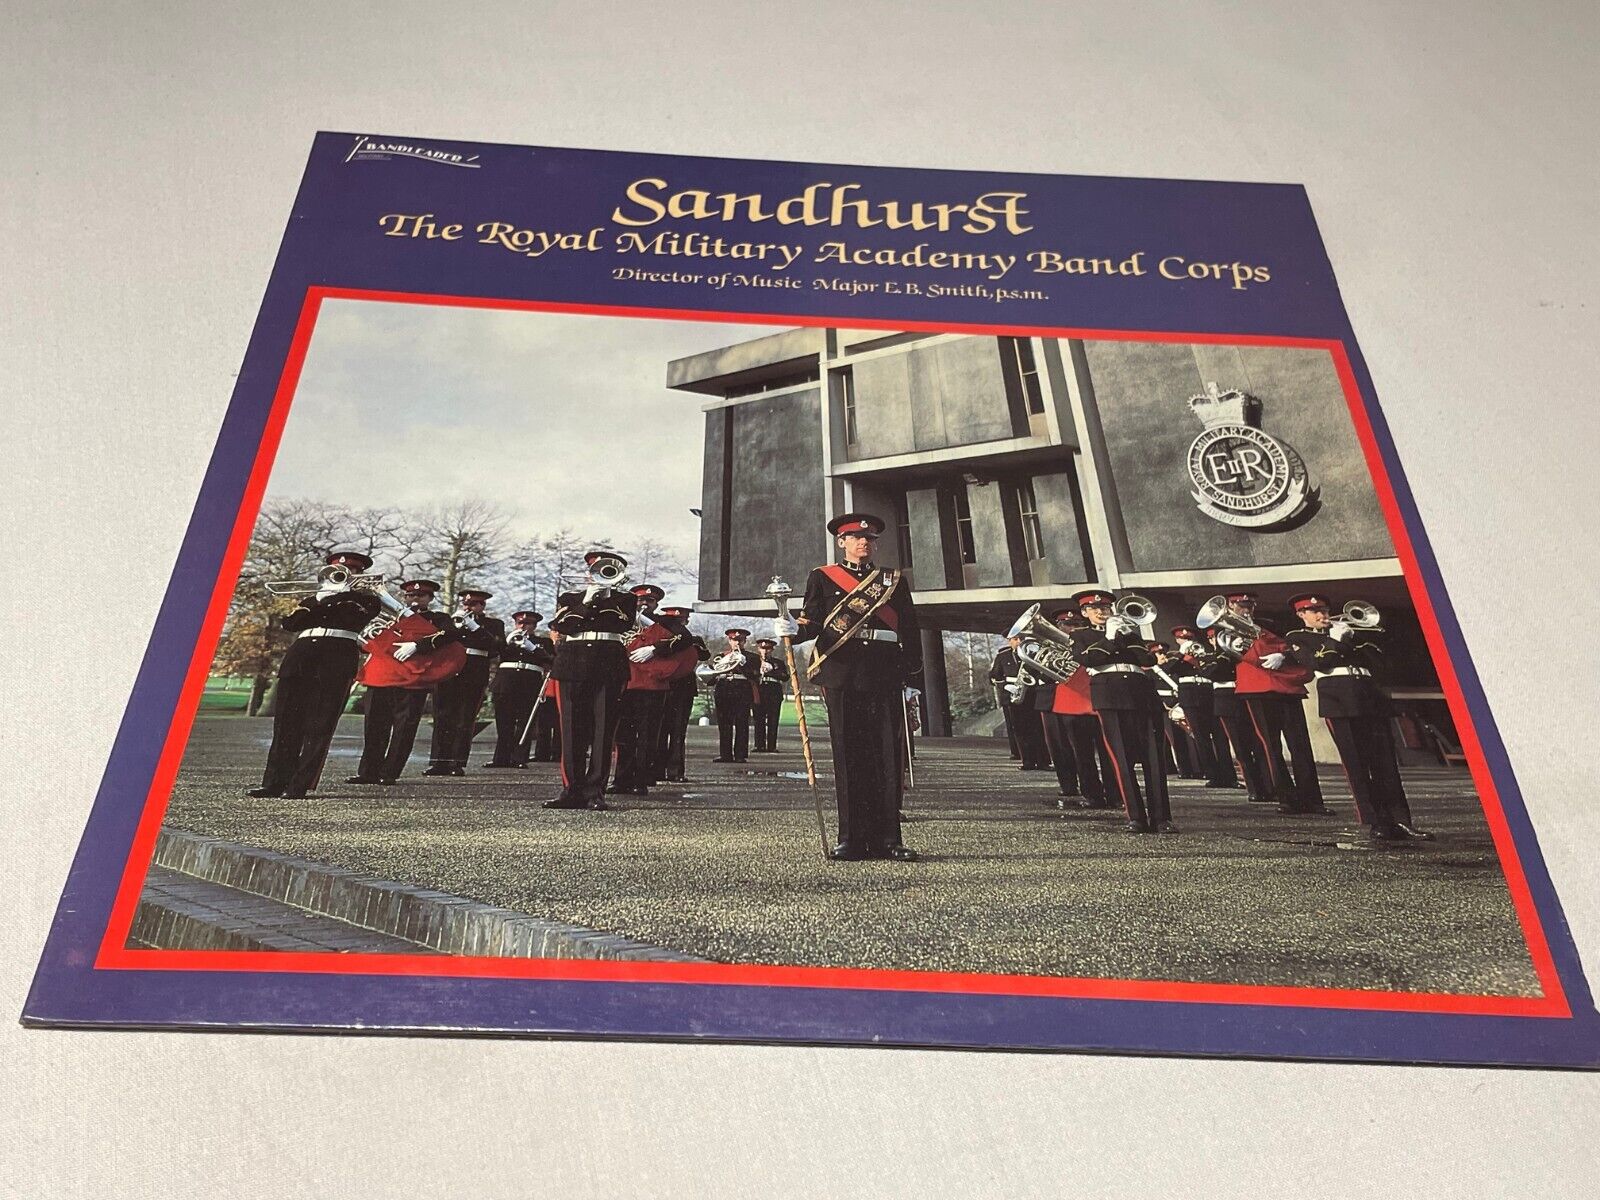 The Royal Military Academy Band Corps - Sandhurst - Vinyl Record LP Album - 1983